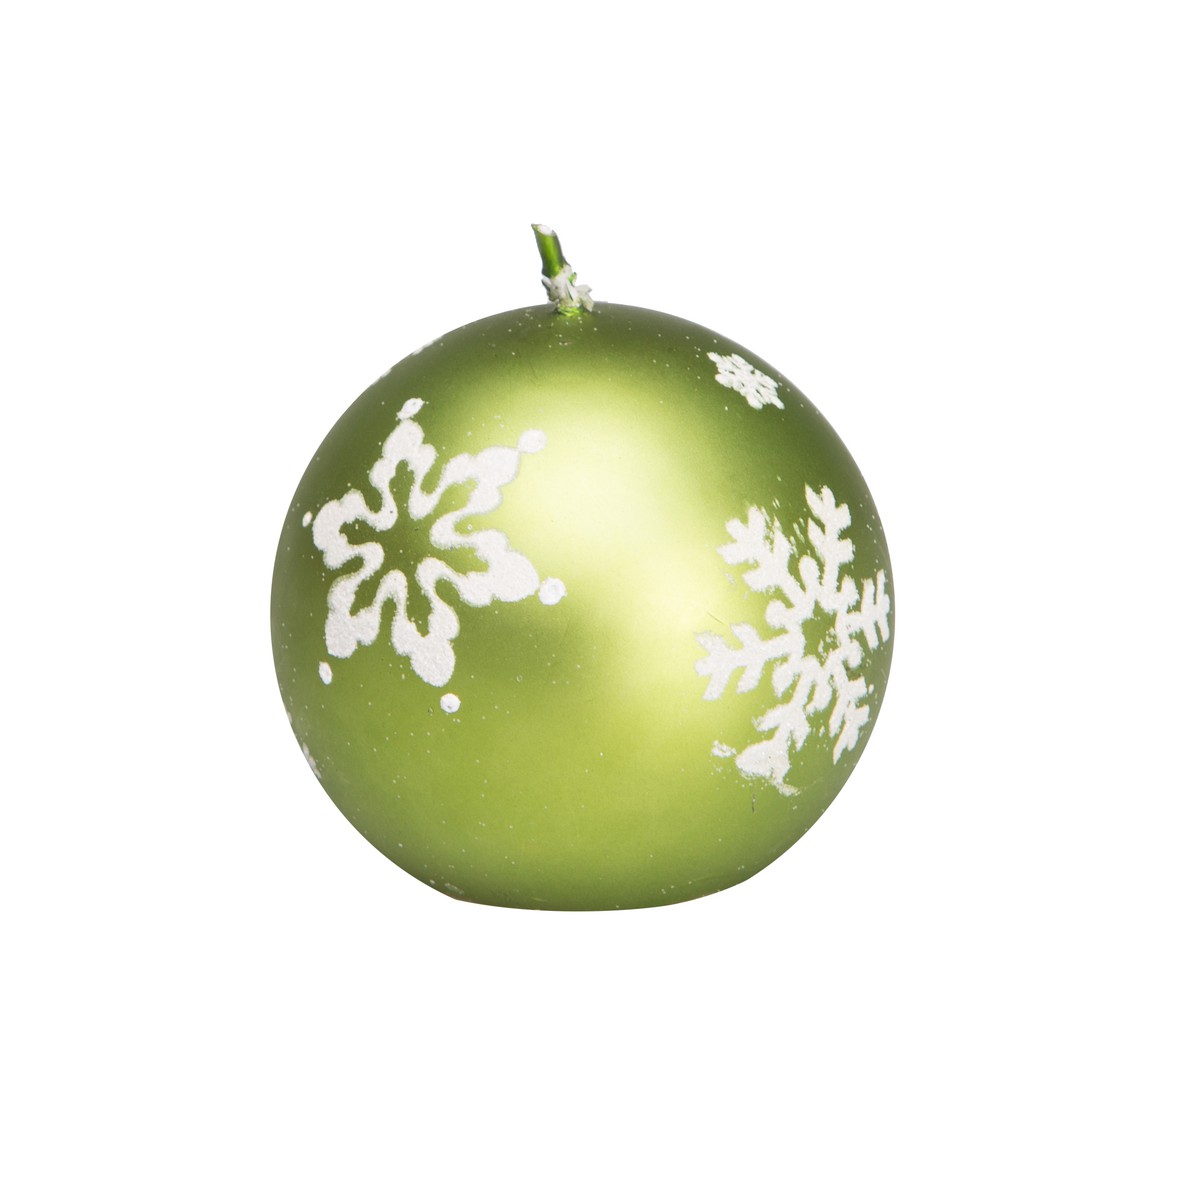   Bougie Boule de Noël Flocon de neige Vert sapin 7.3x7.3x7.2cm